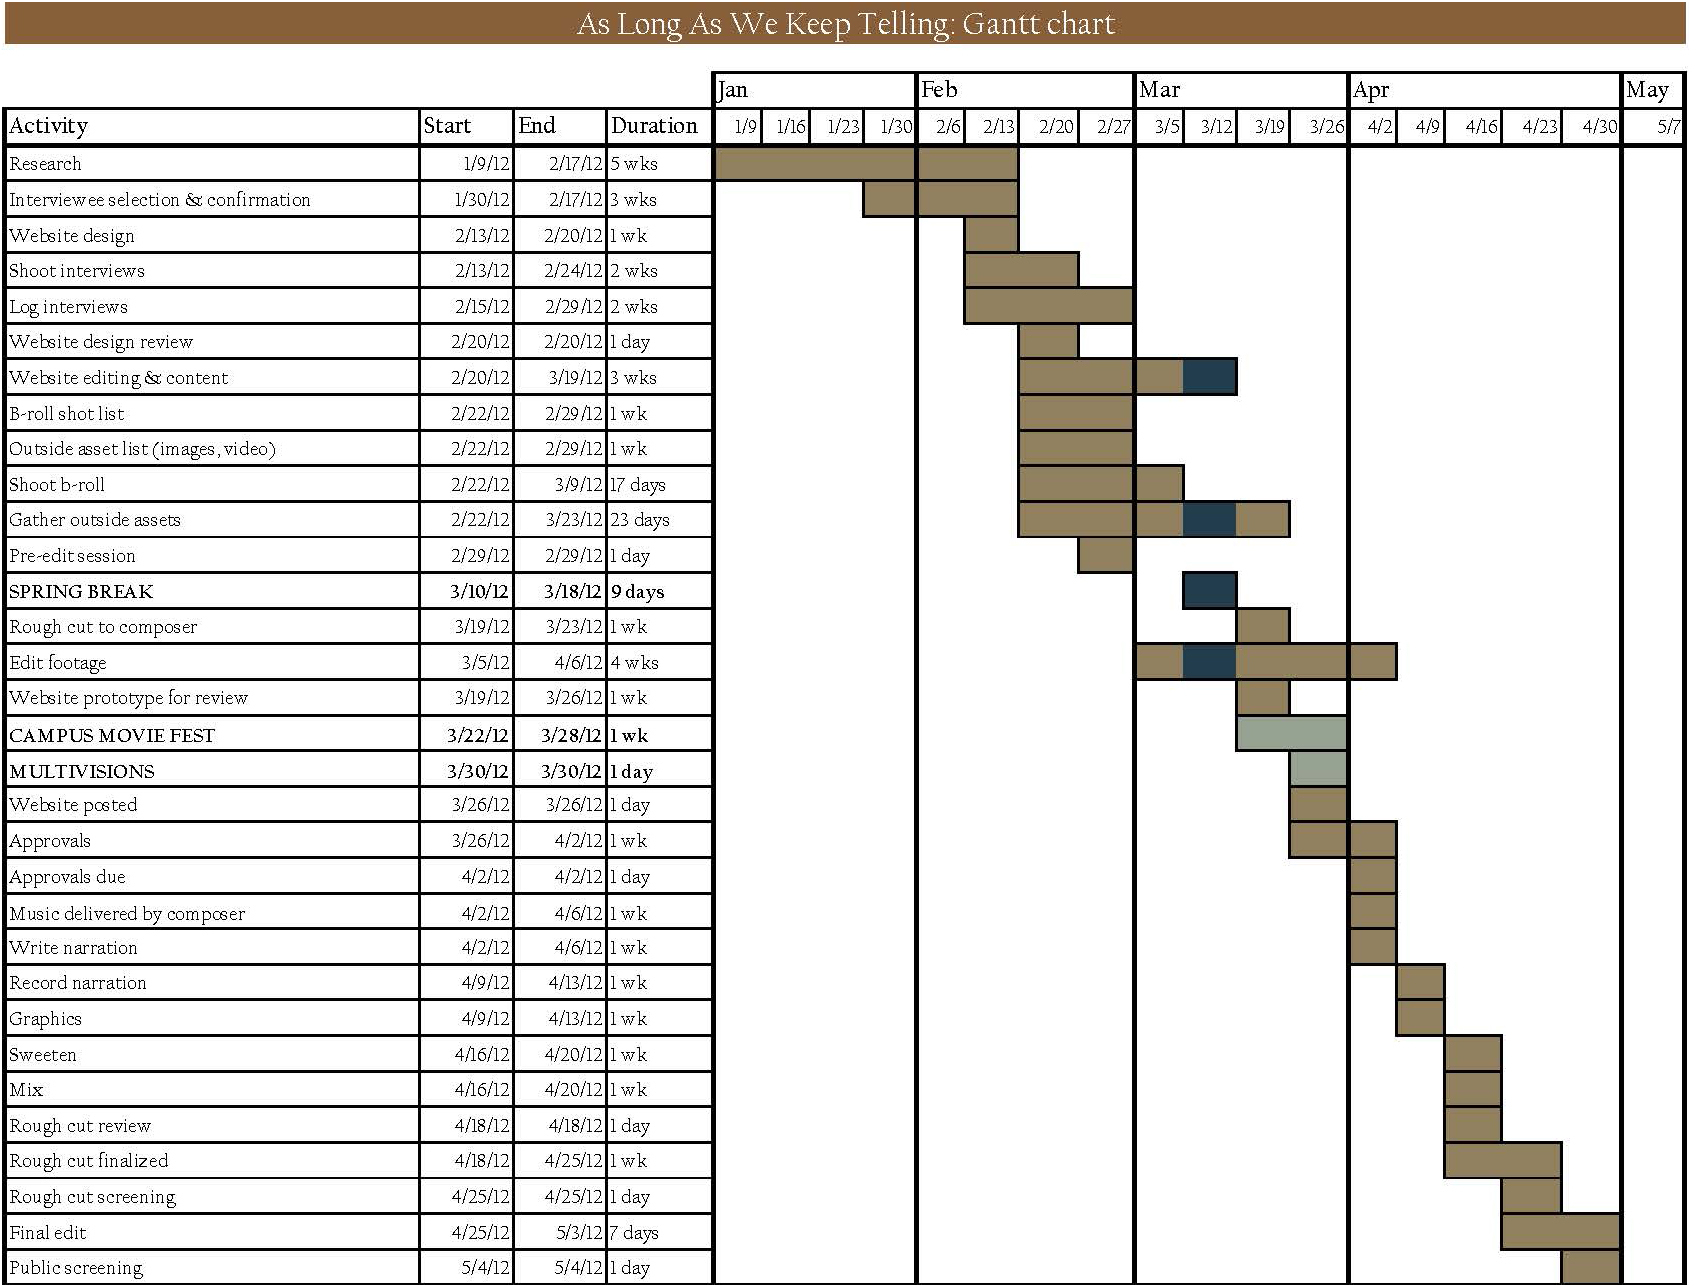 Gantt chart depicting production timeline